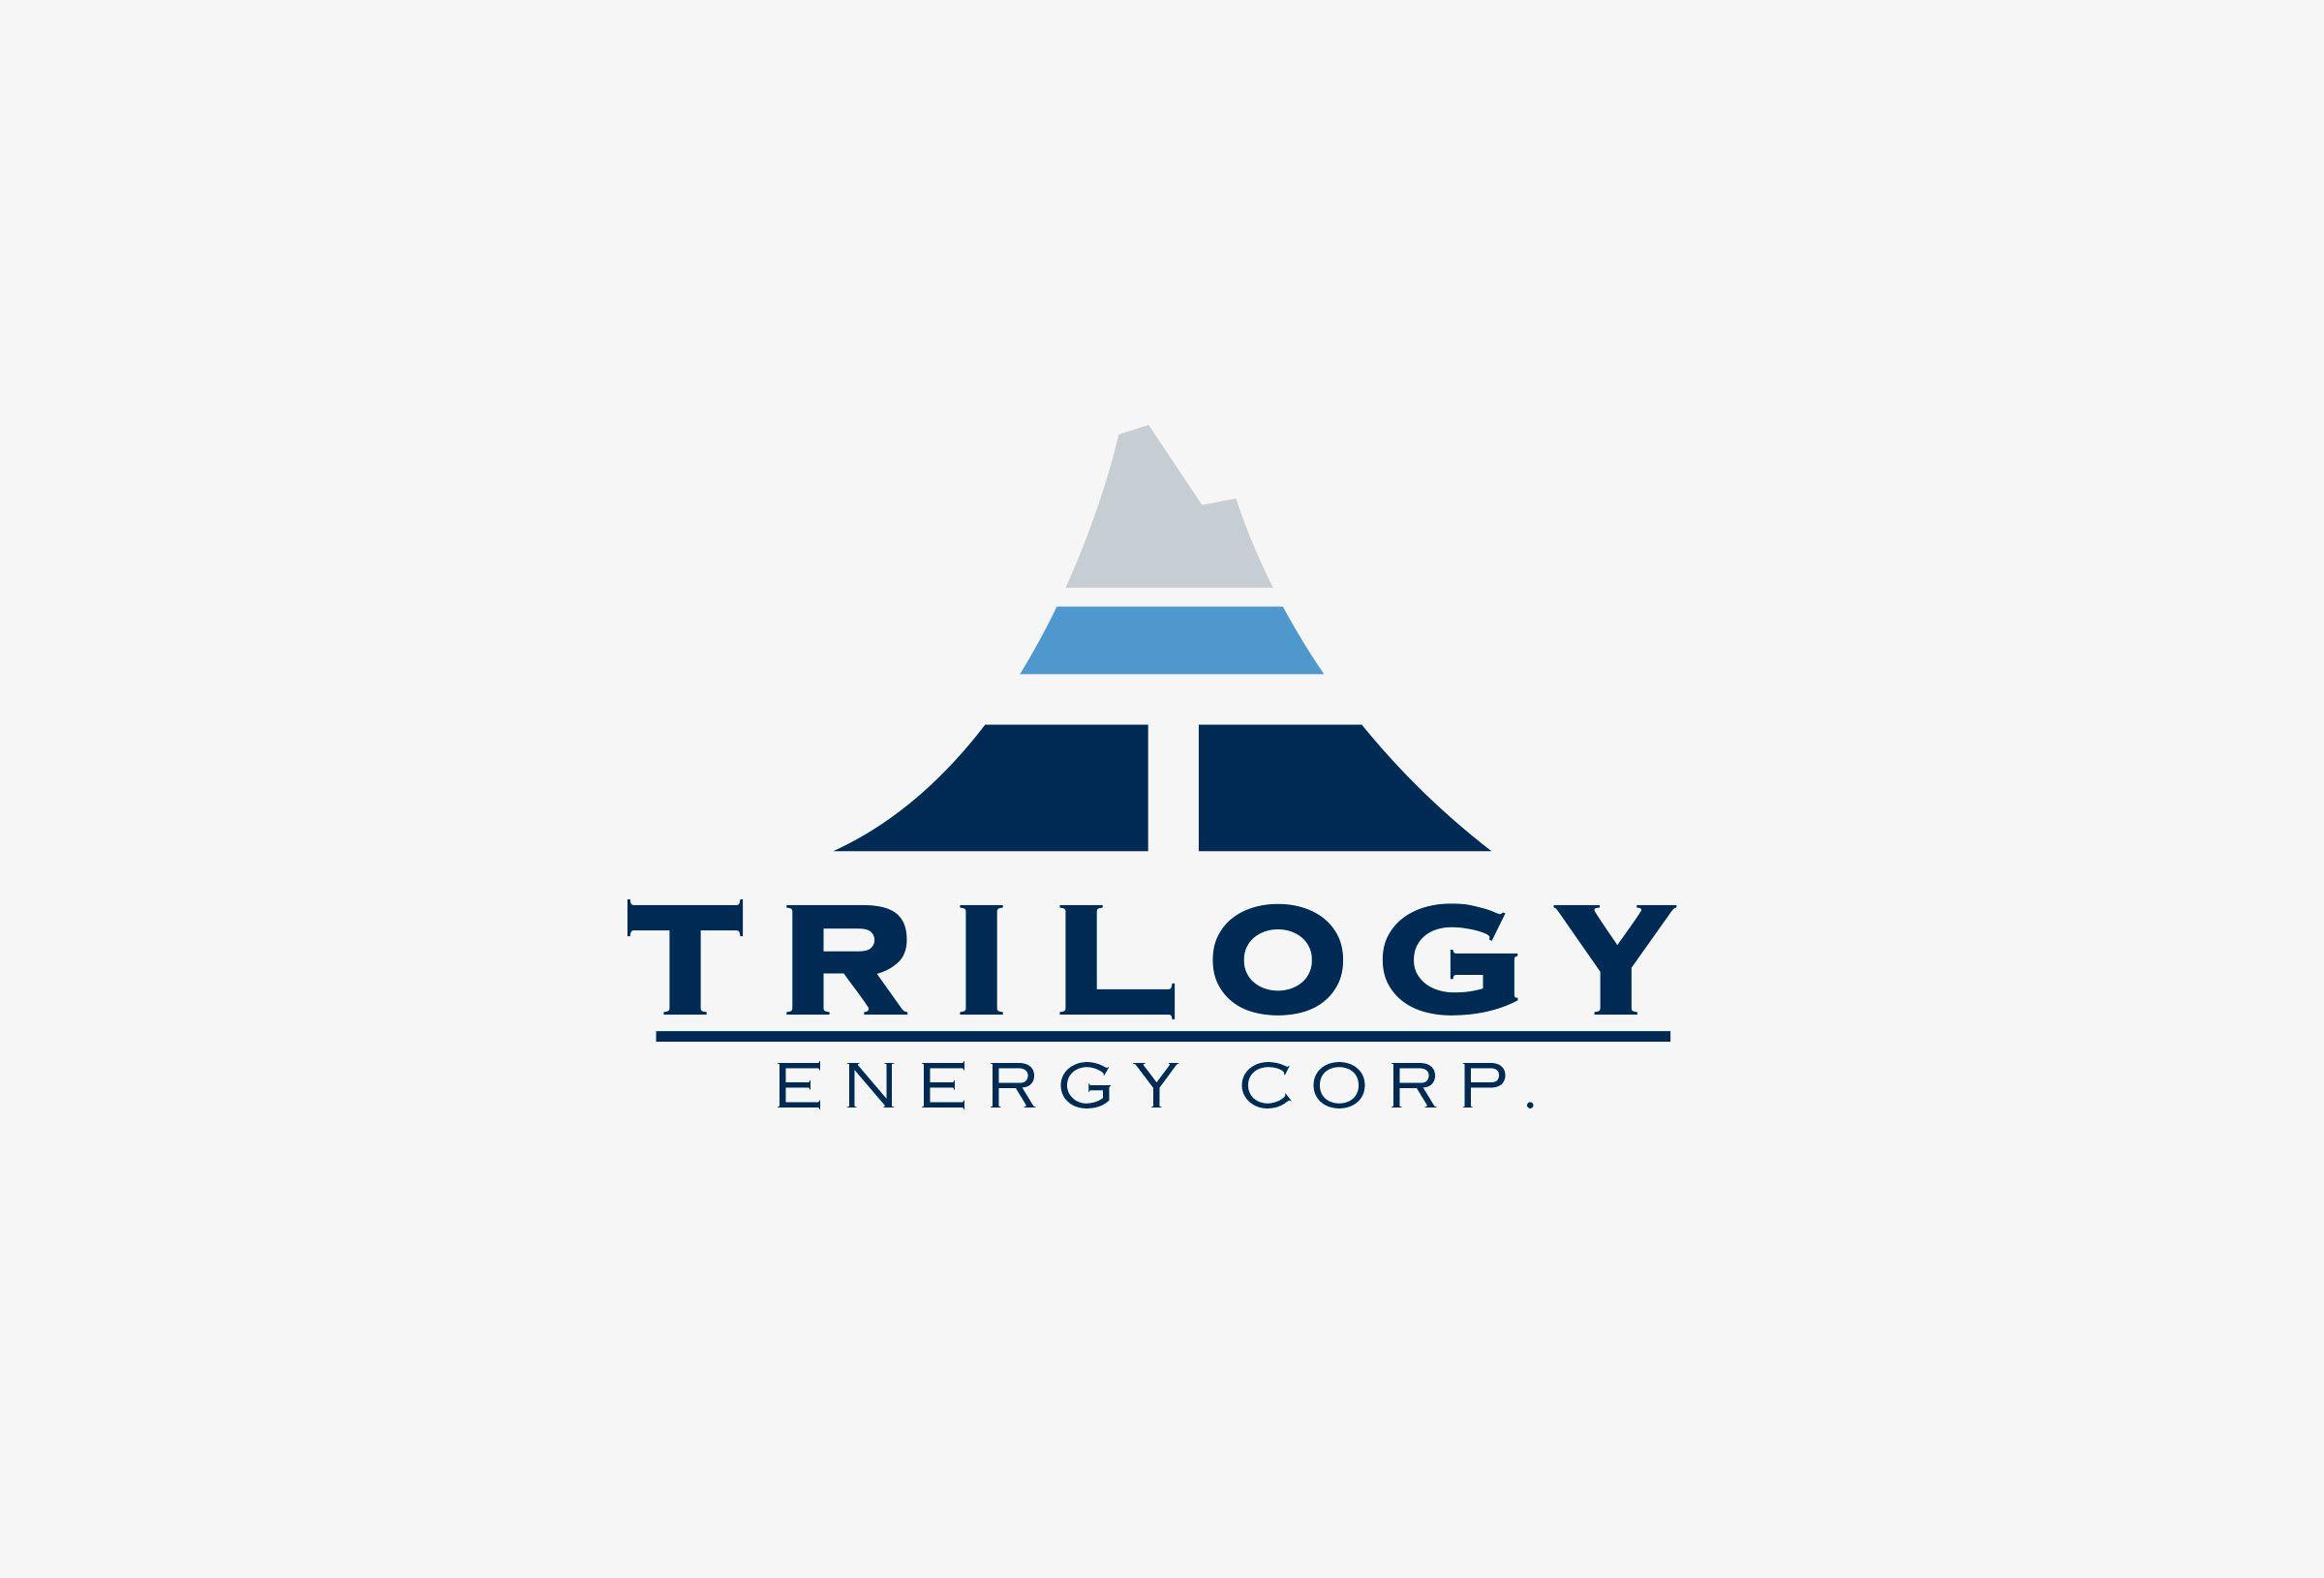 Trilogy Logo - Trilogy Energy Corp. Logo Design